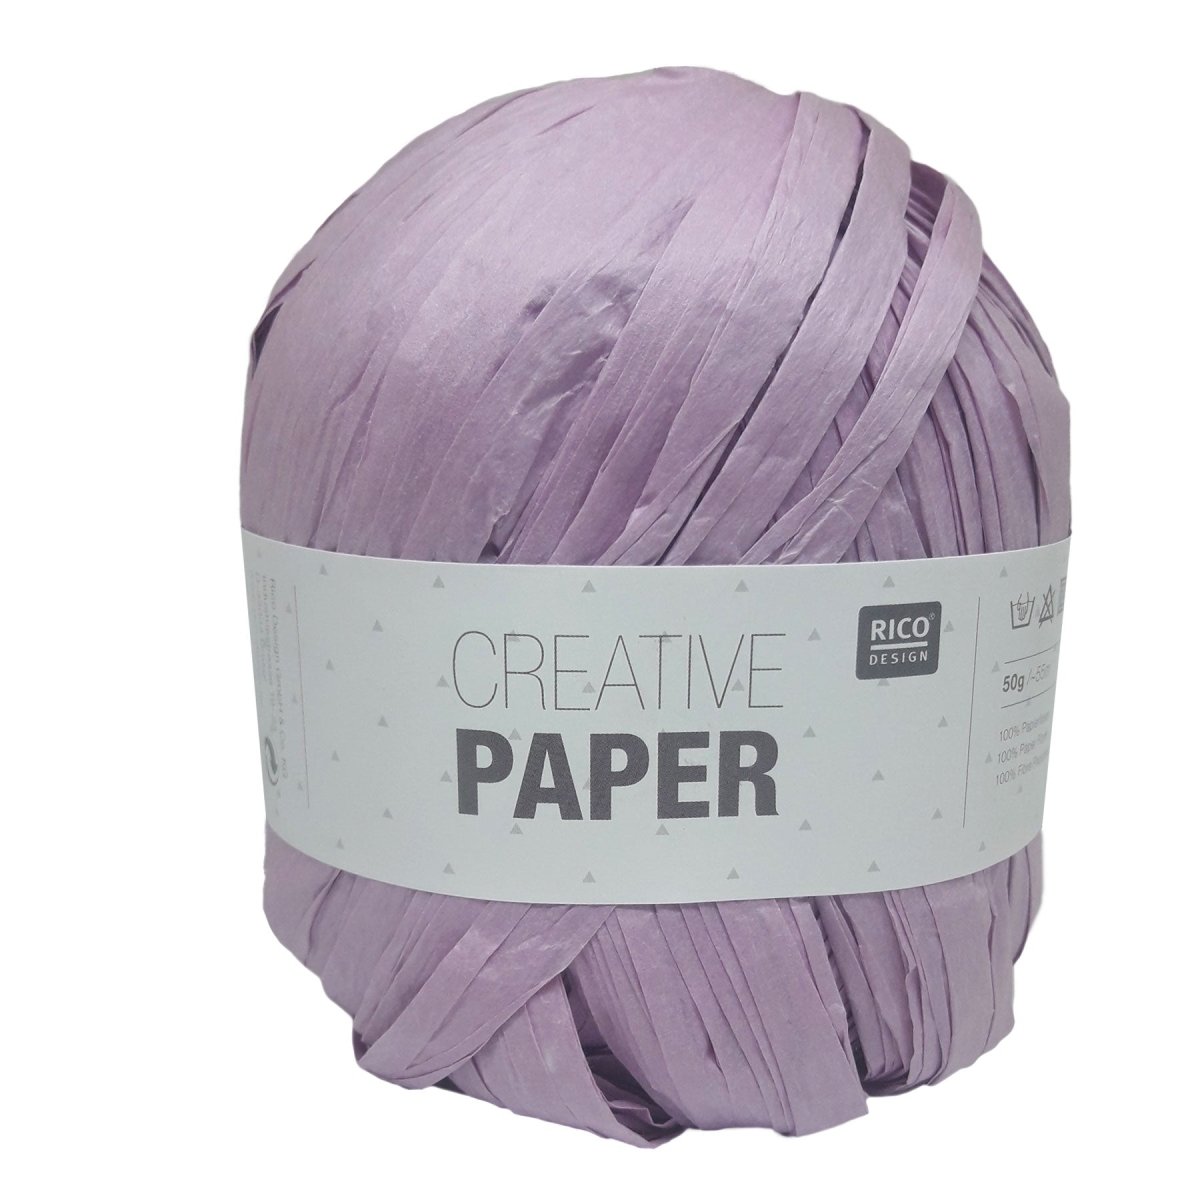 CREATIVE PAPER - Crochetstores383170-0044050051541720